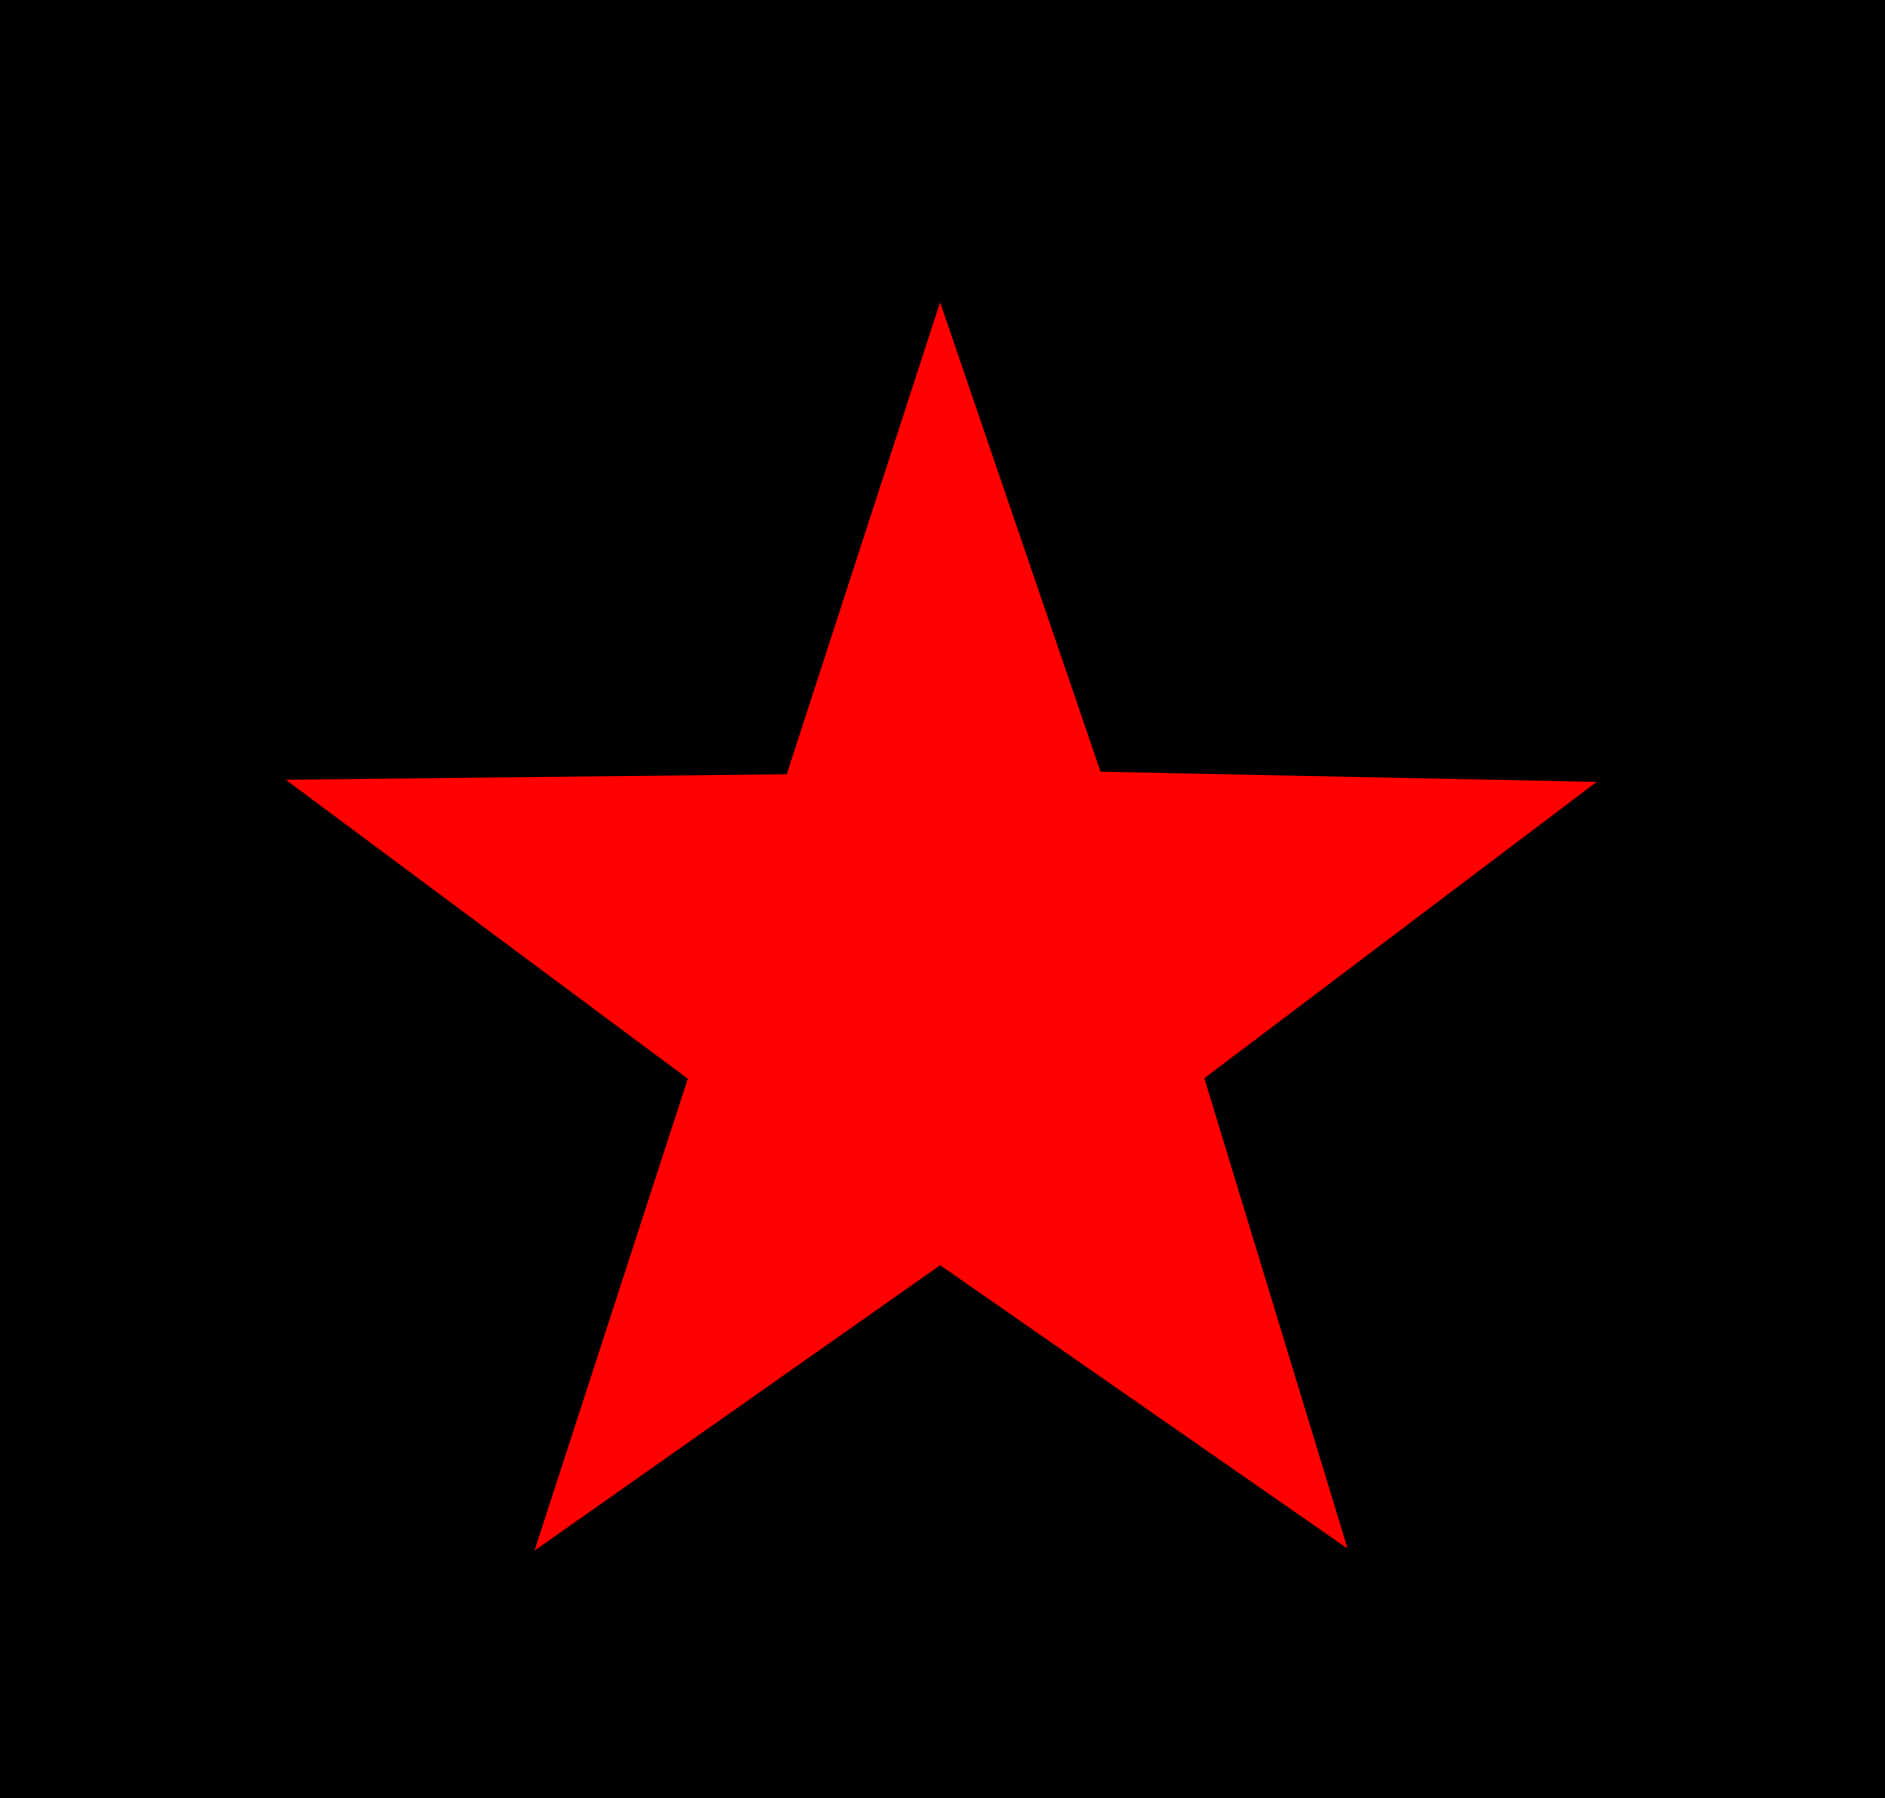 Red Star Black Background PNG image